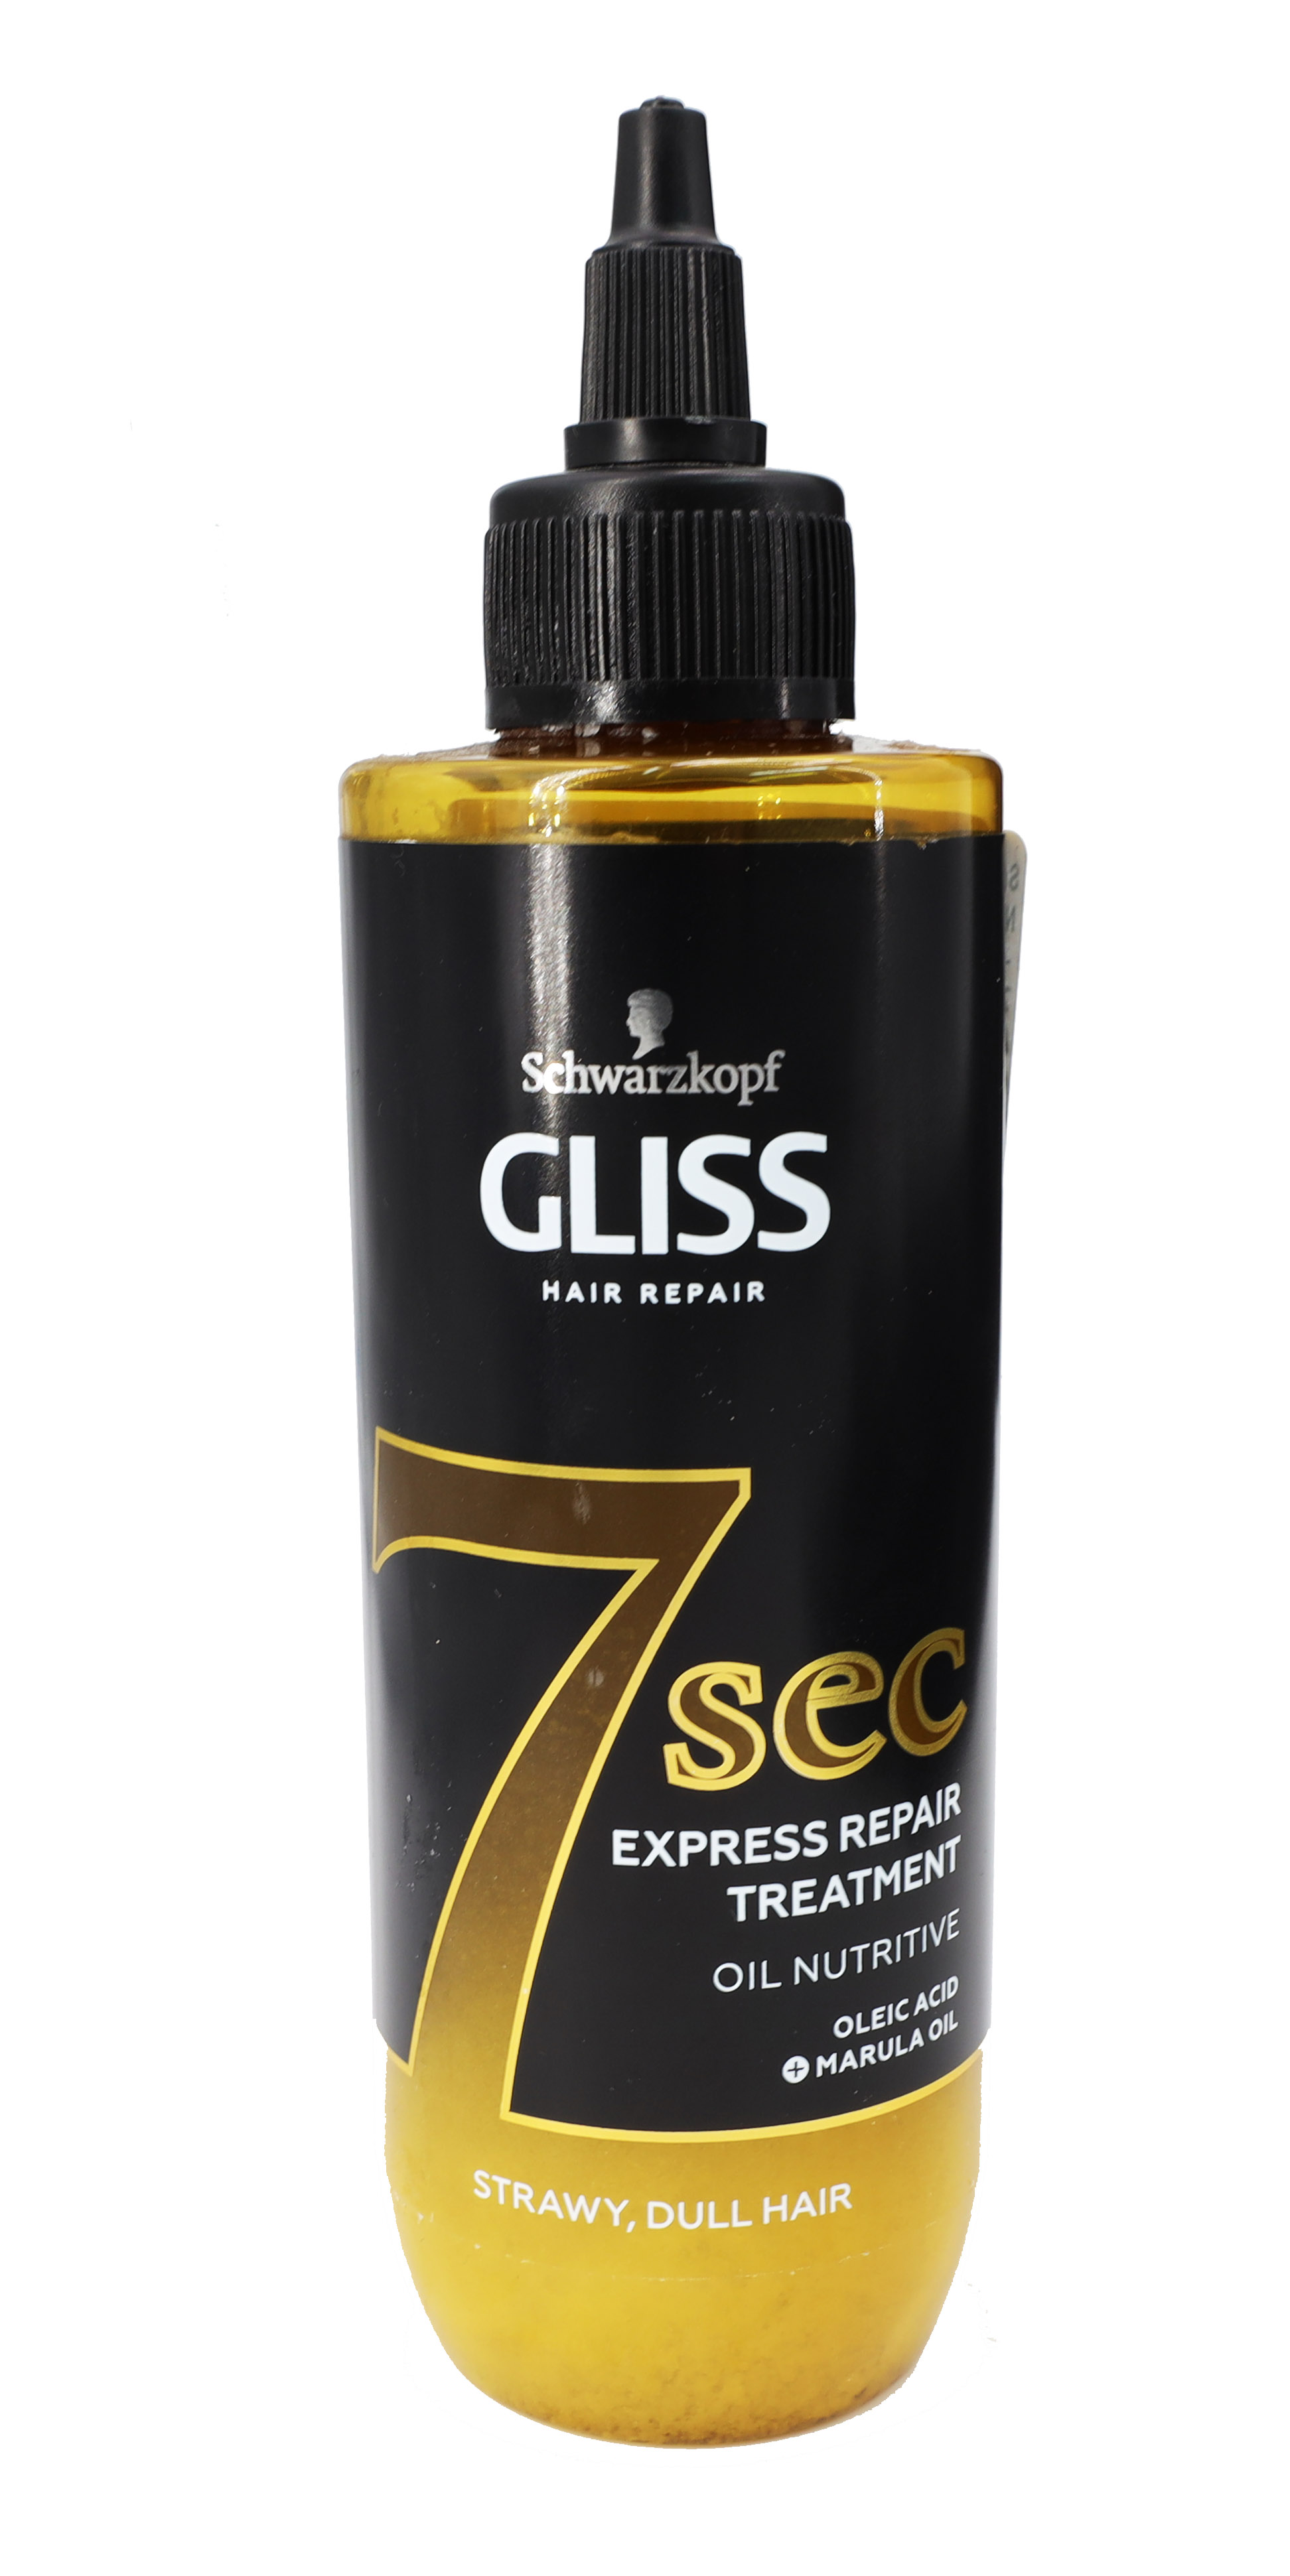 Schwarzkopf Gliss Kur 7sec Express-Repair-Kur Oil Nutritive Haarkur 200 ml